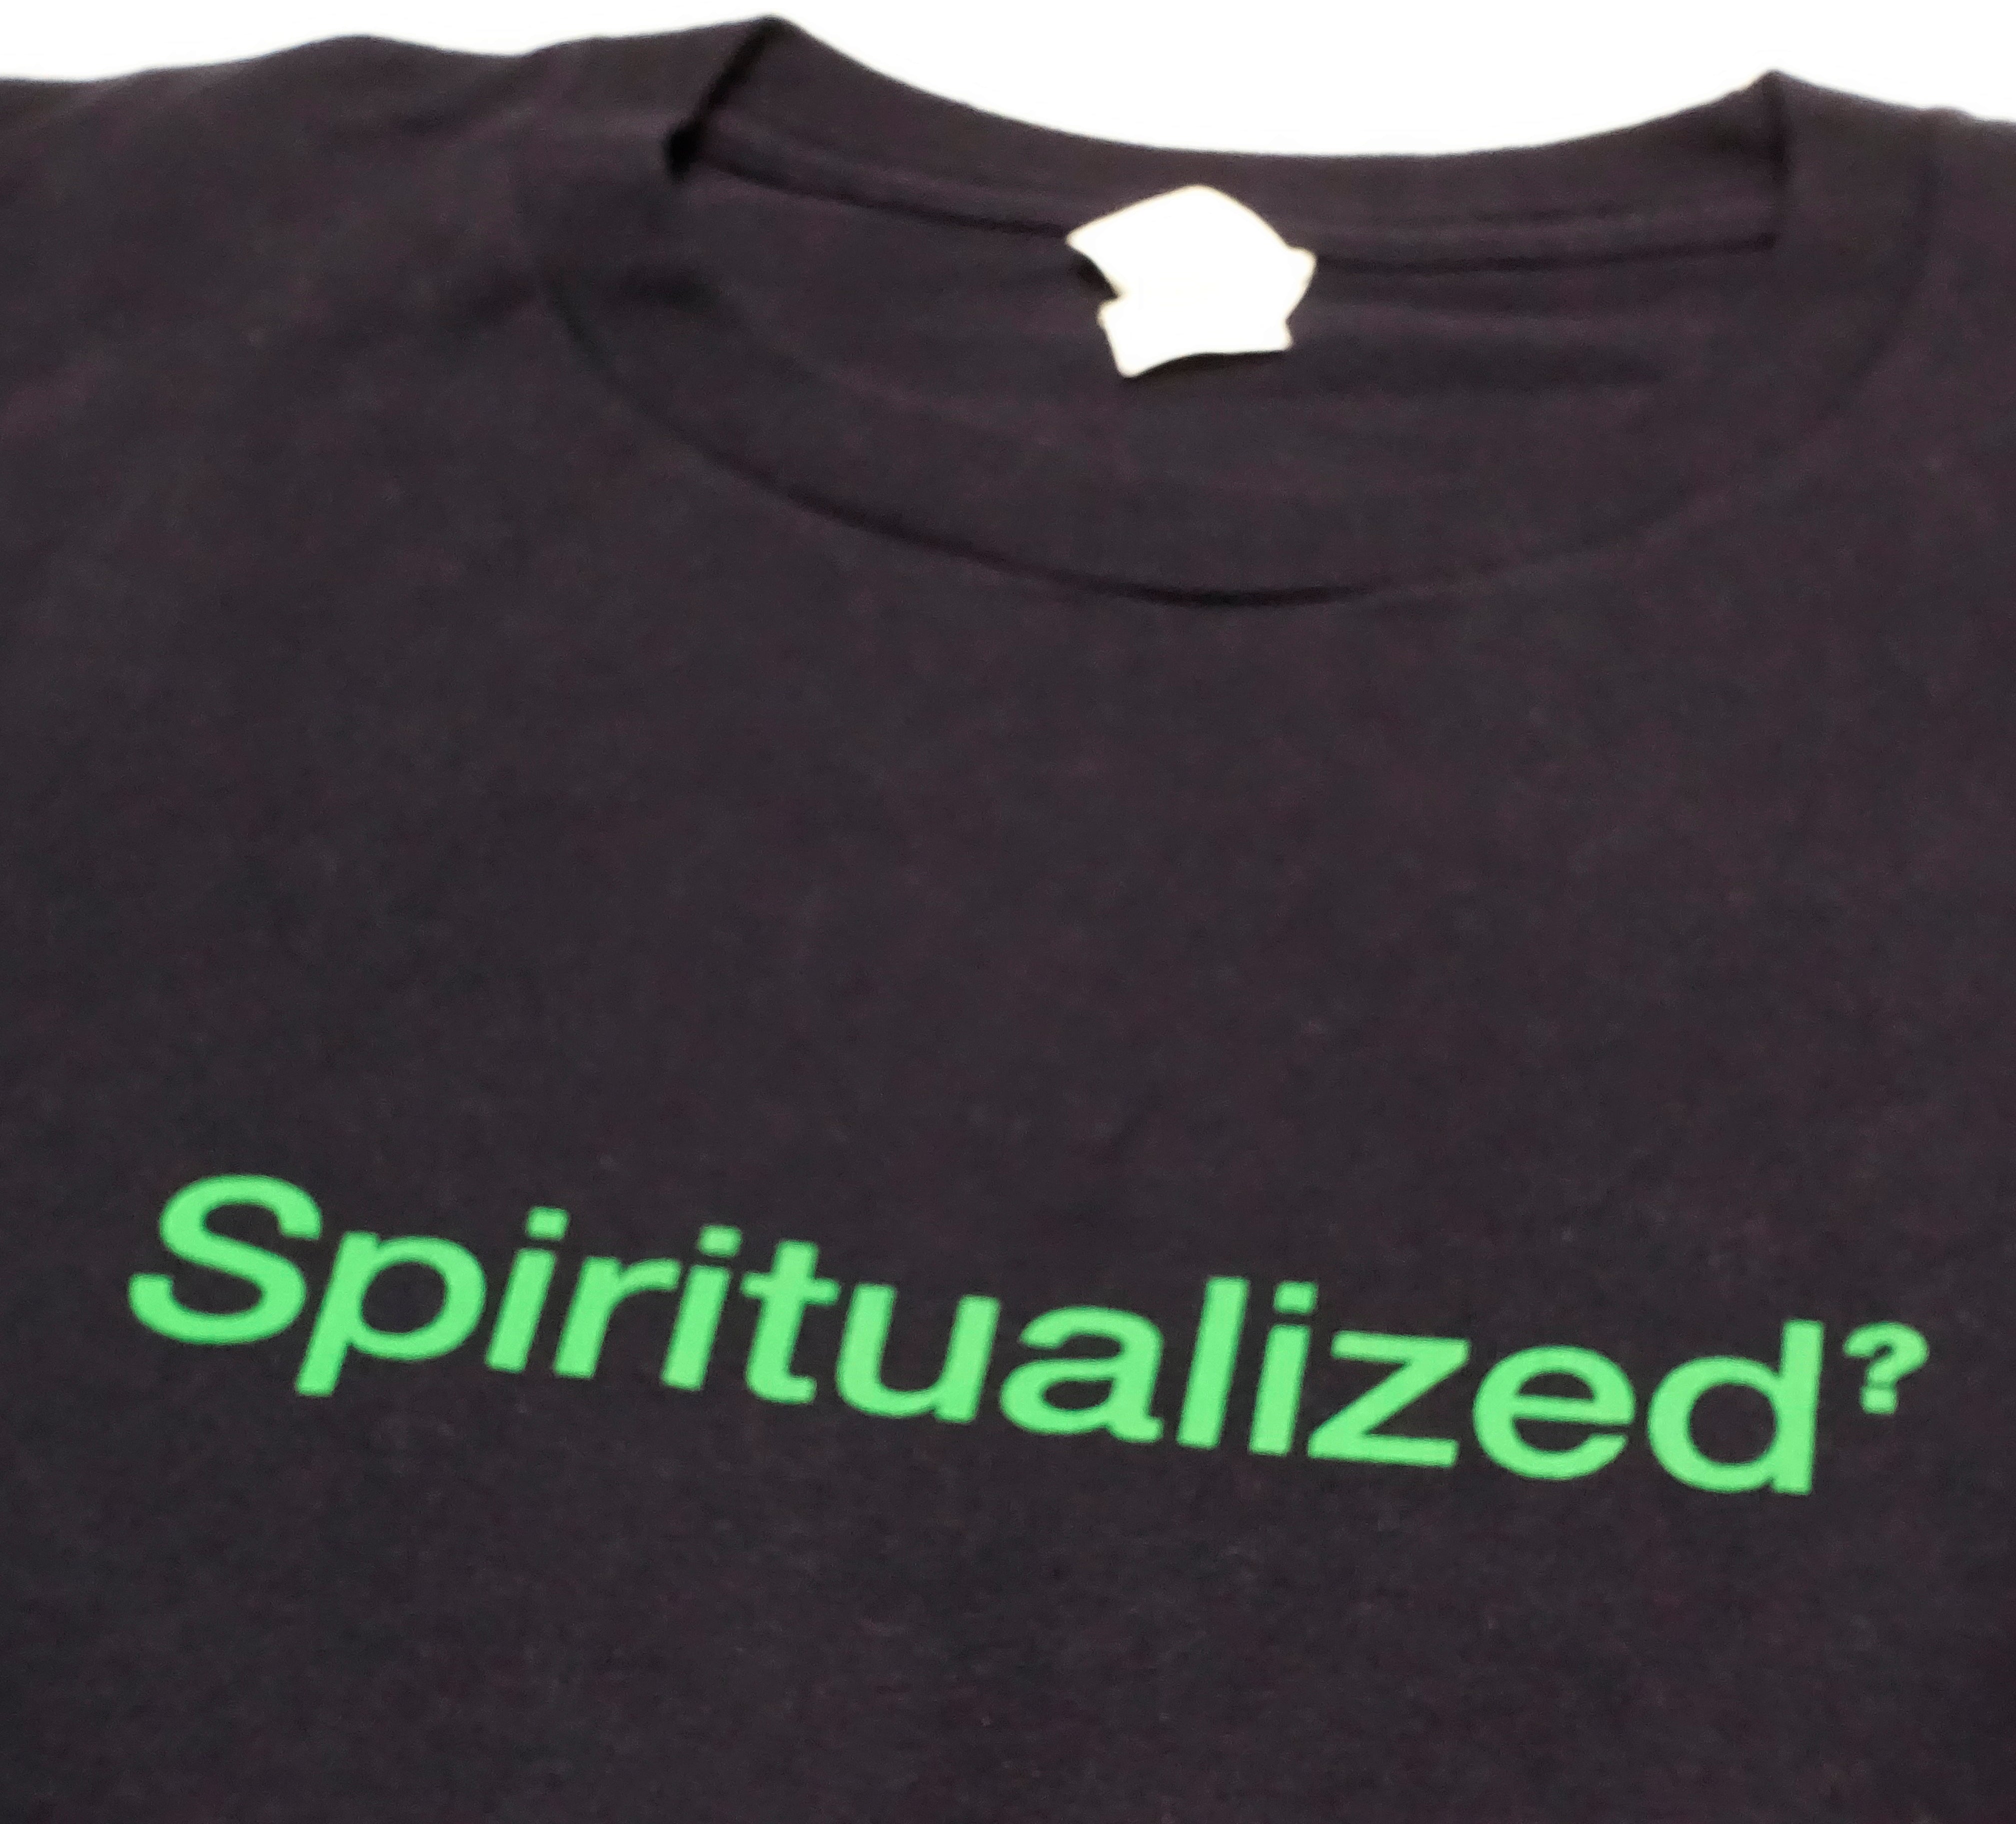 Spiritualized® - Spiritualized? Tour Shirt Size Large